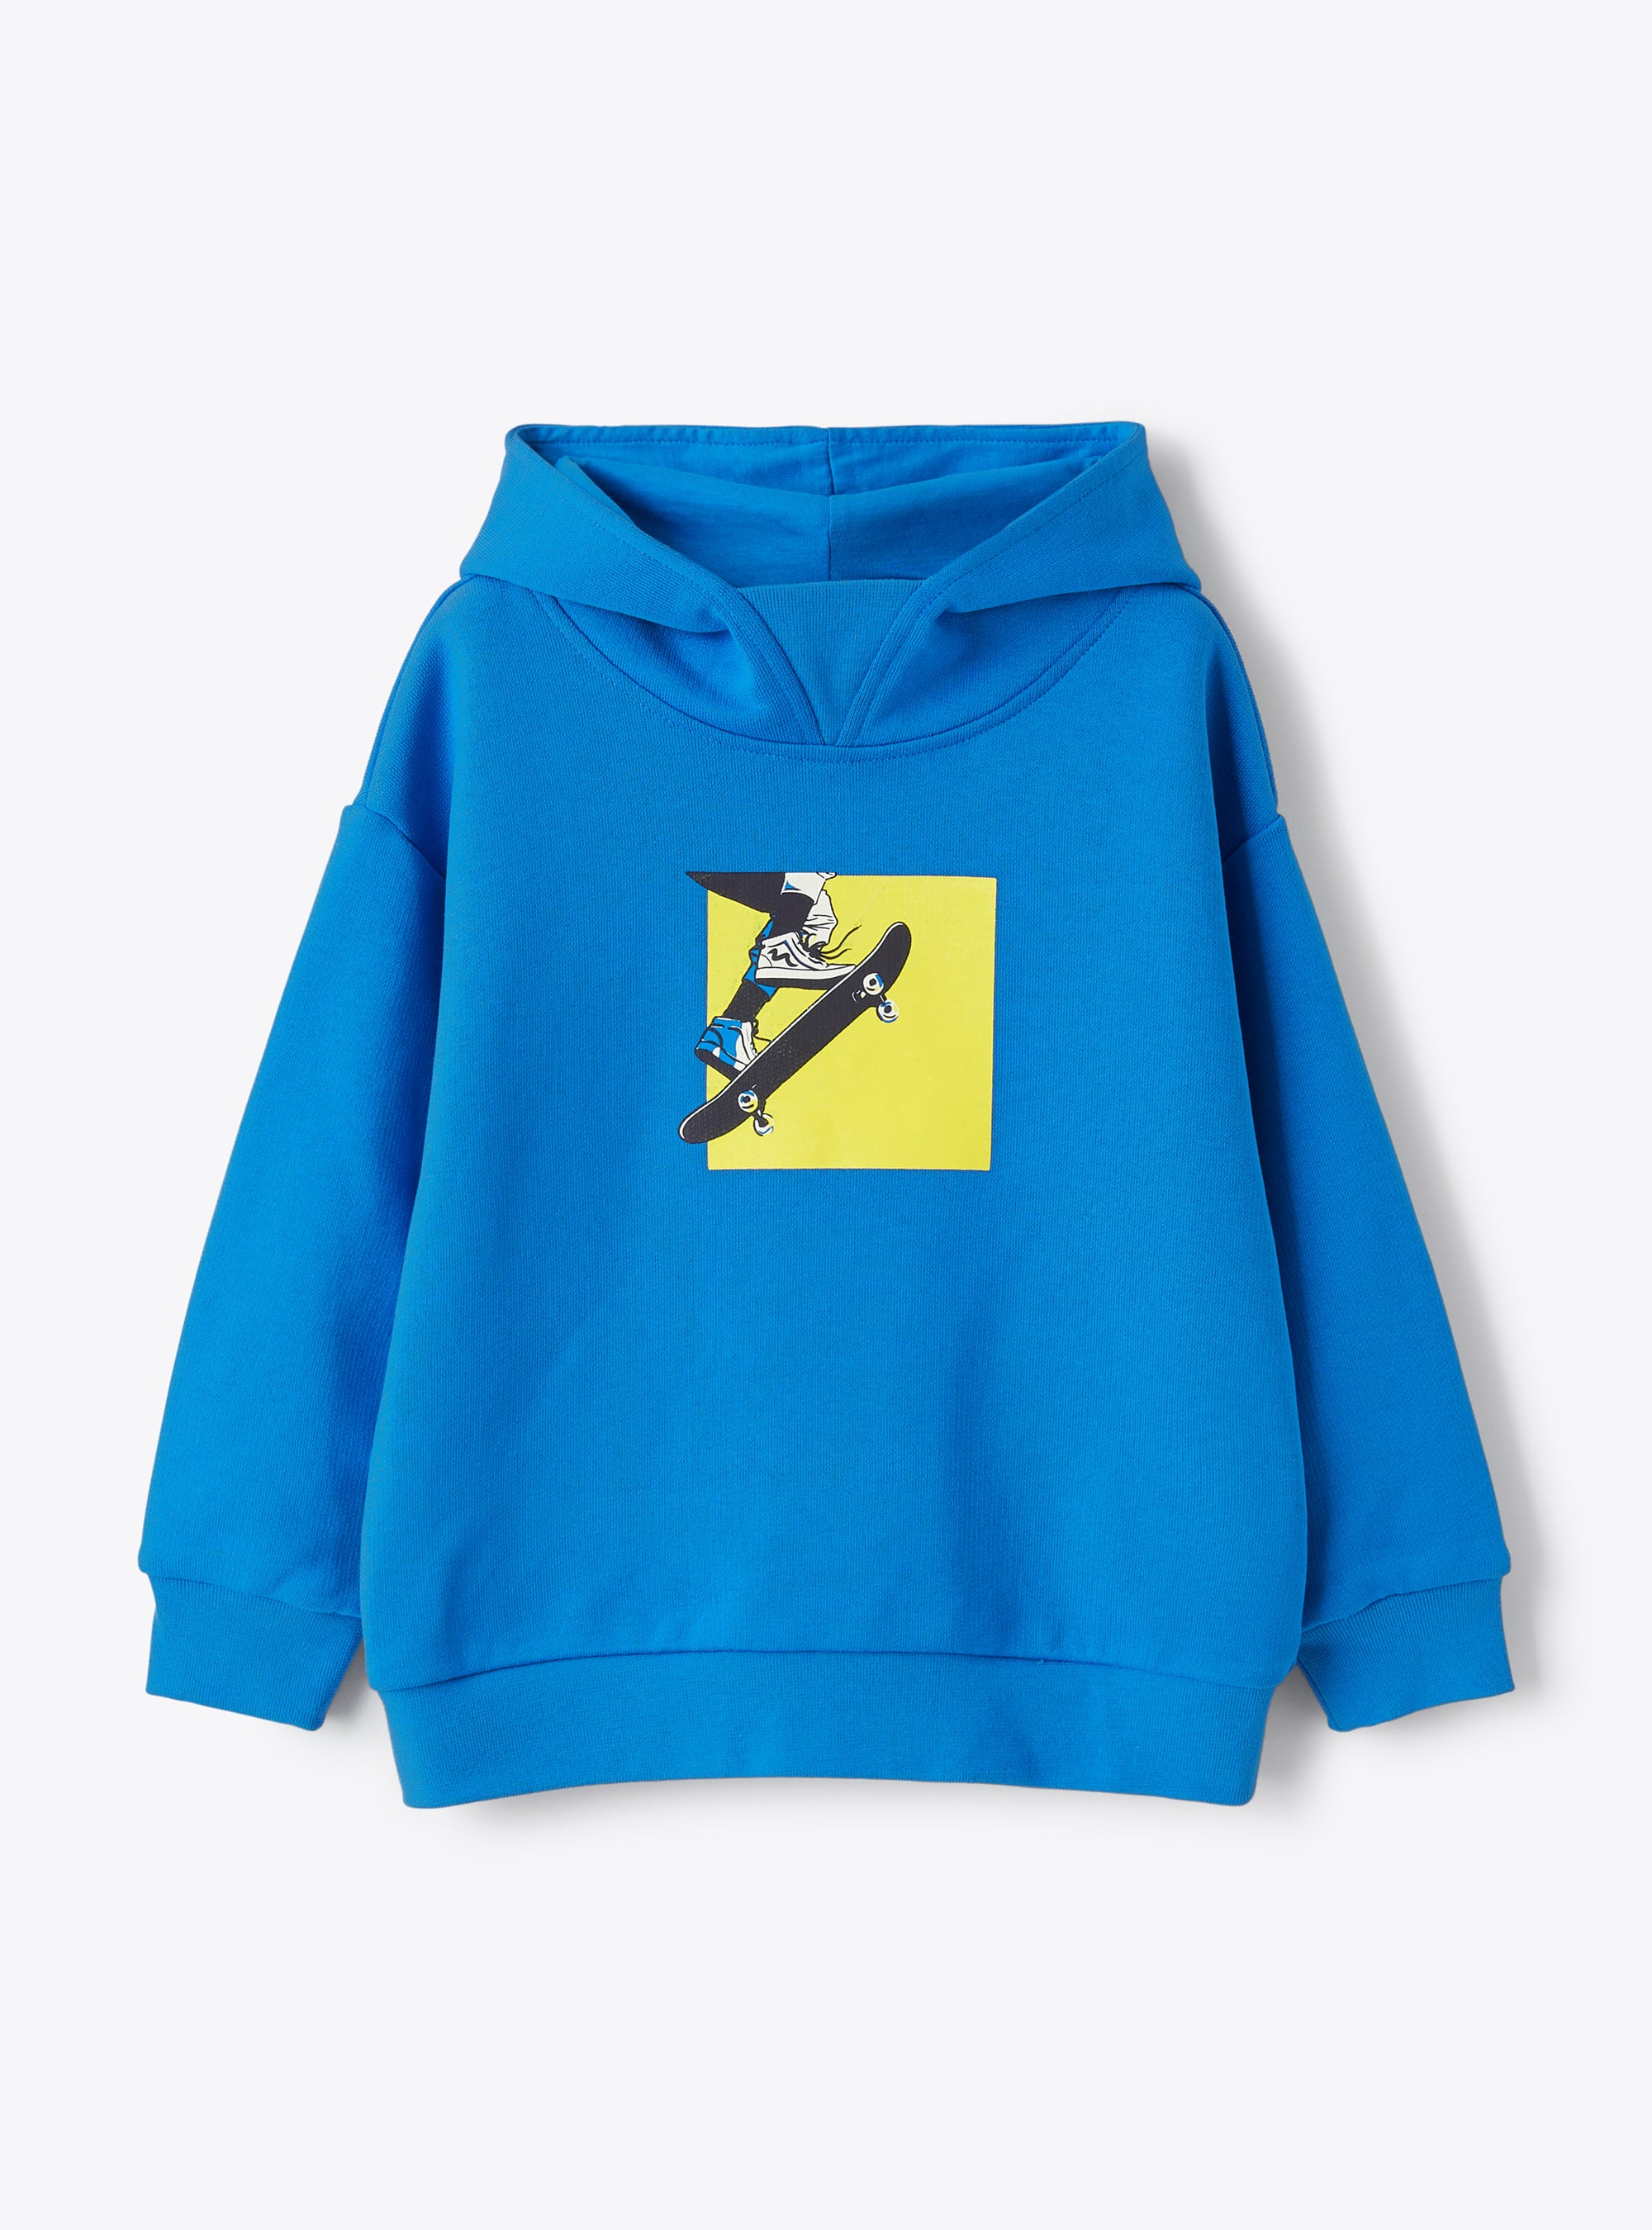 Hooded sweatshirt with skater print design - Sweatshirts - Il Gufo